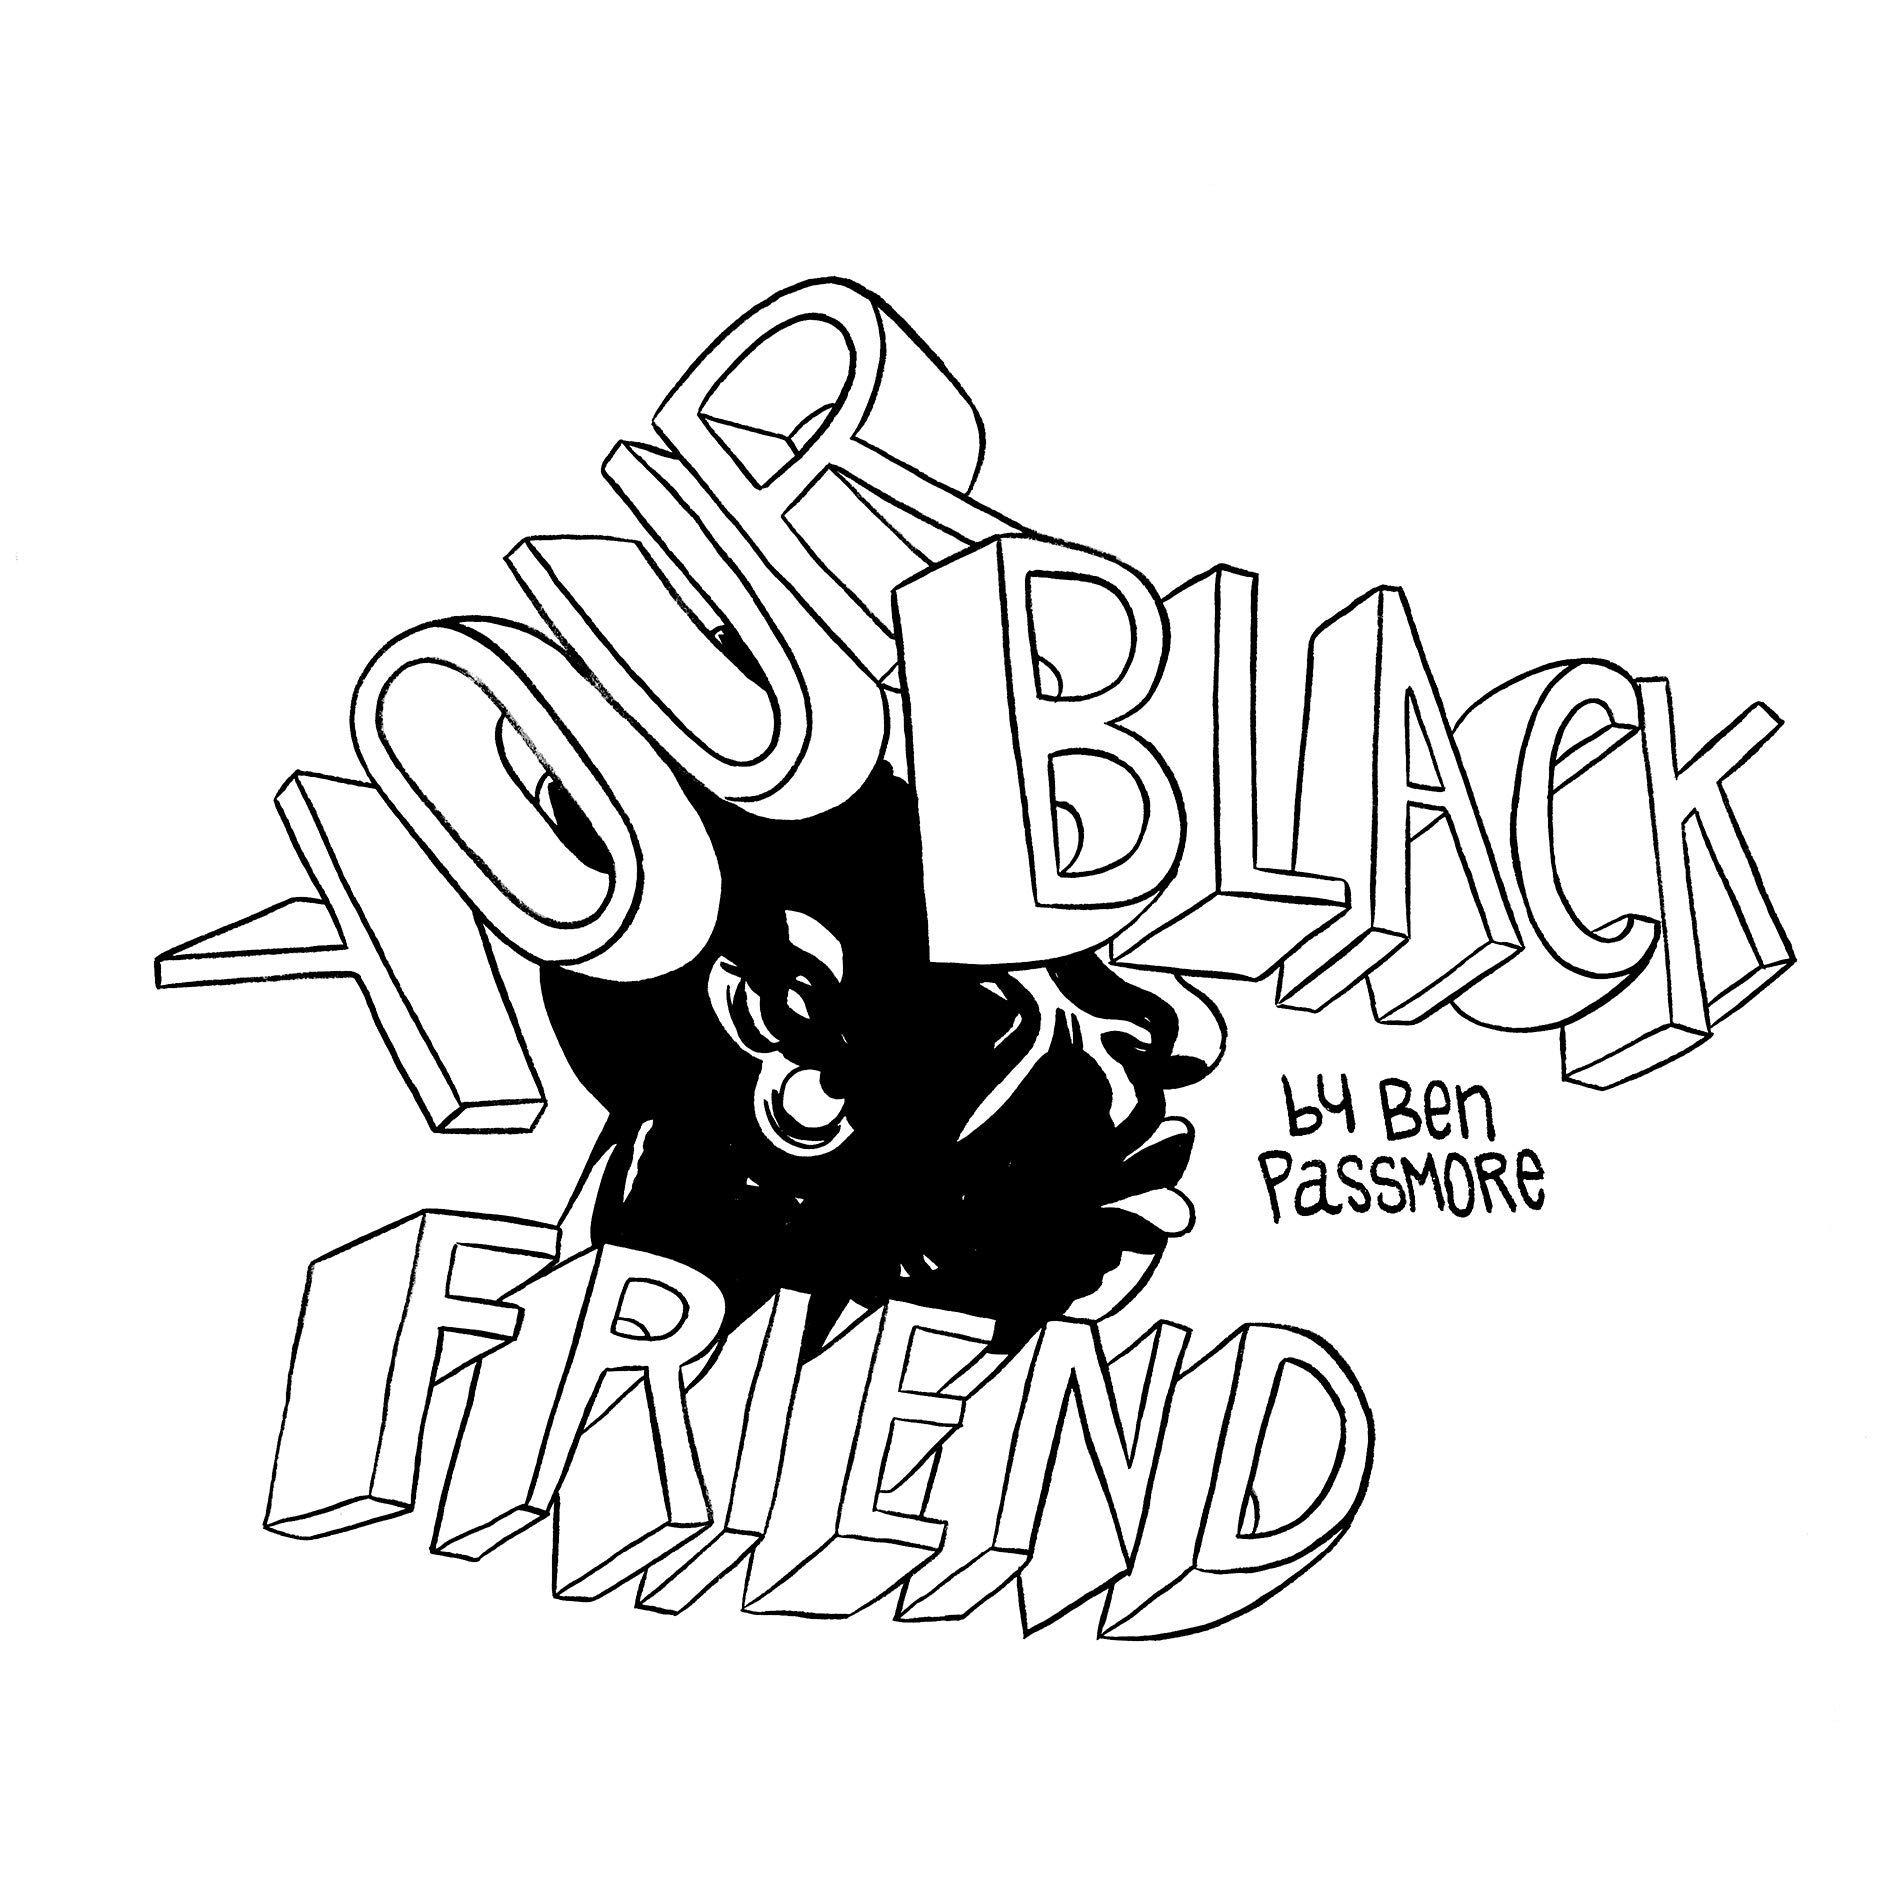 Friend Black and White Logo - Your Black Friend